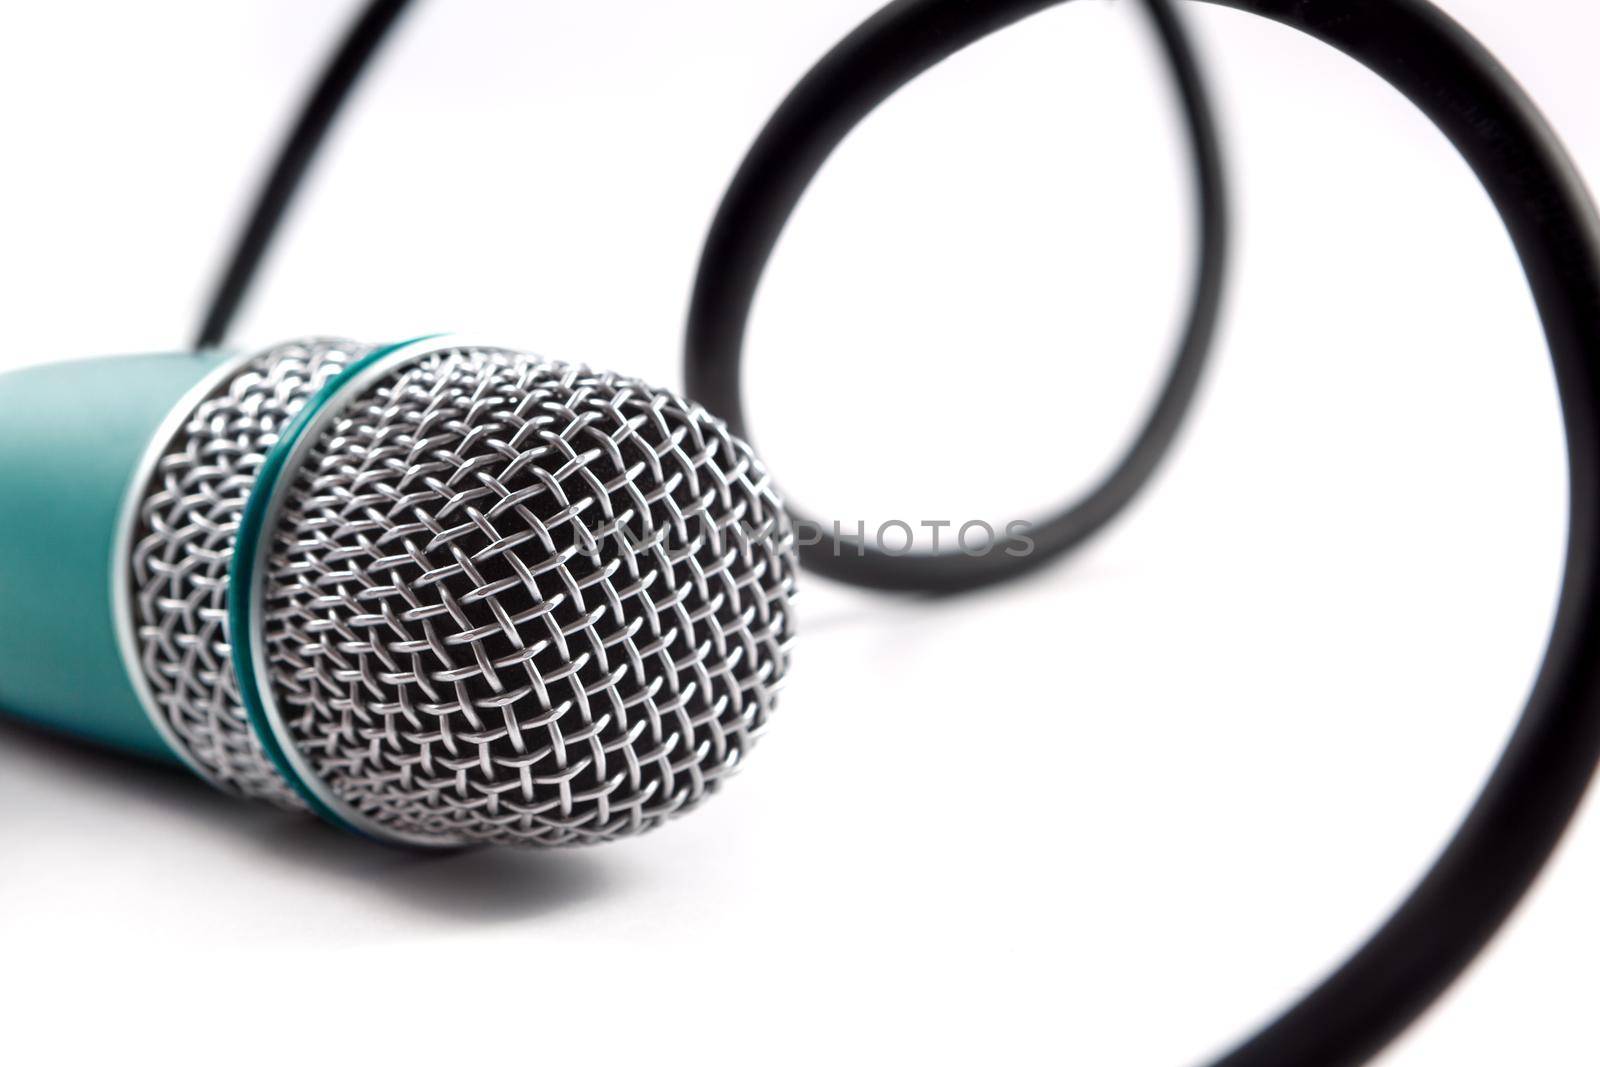 Microphone detail by carloscastilla